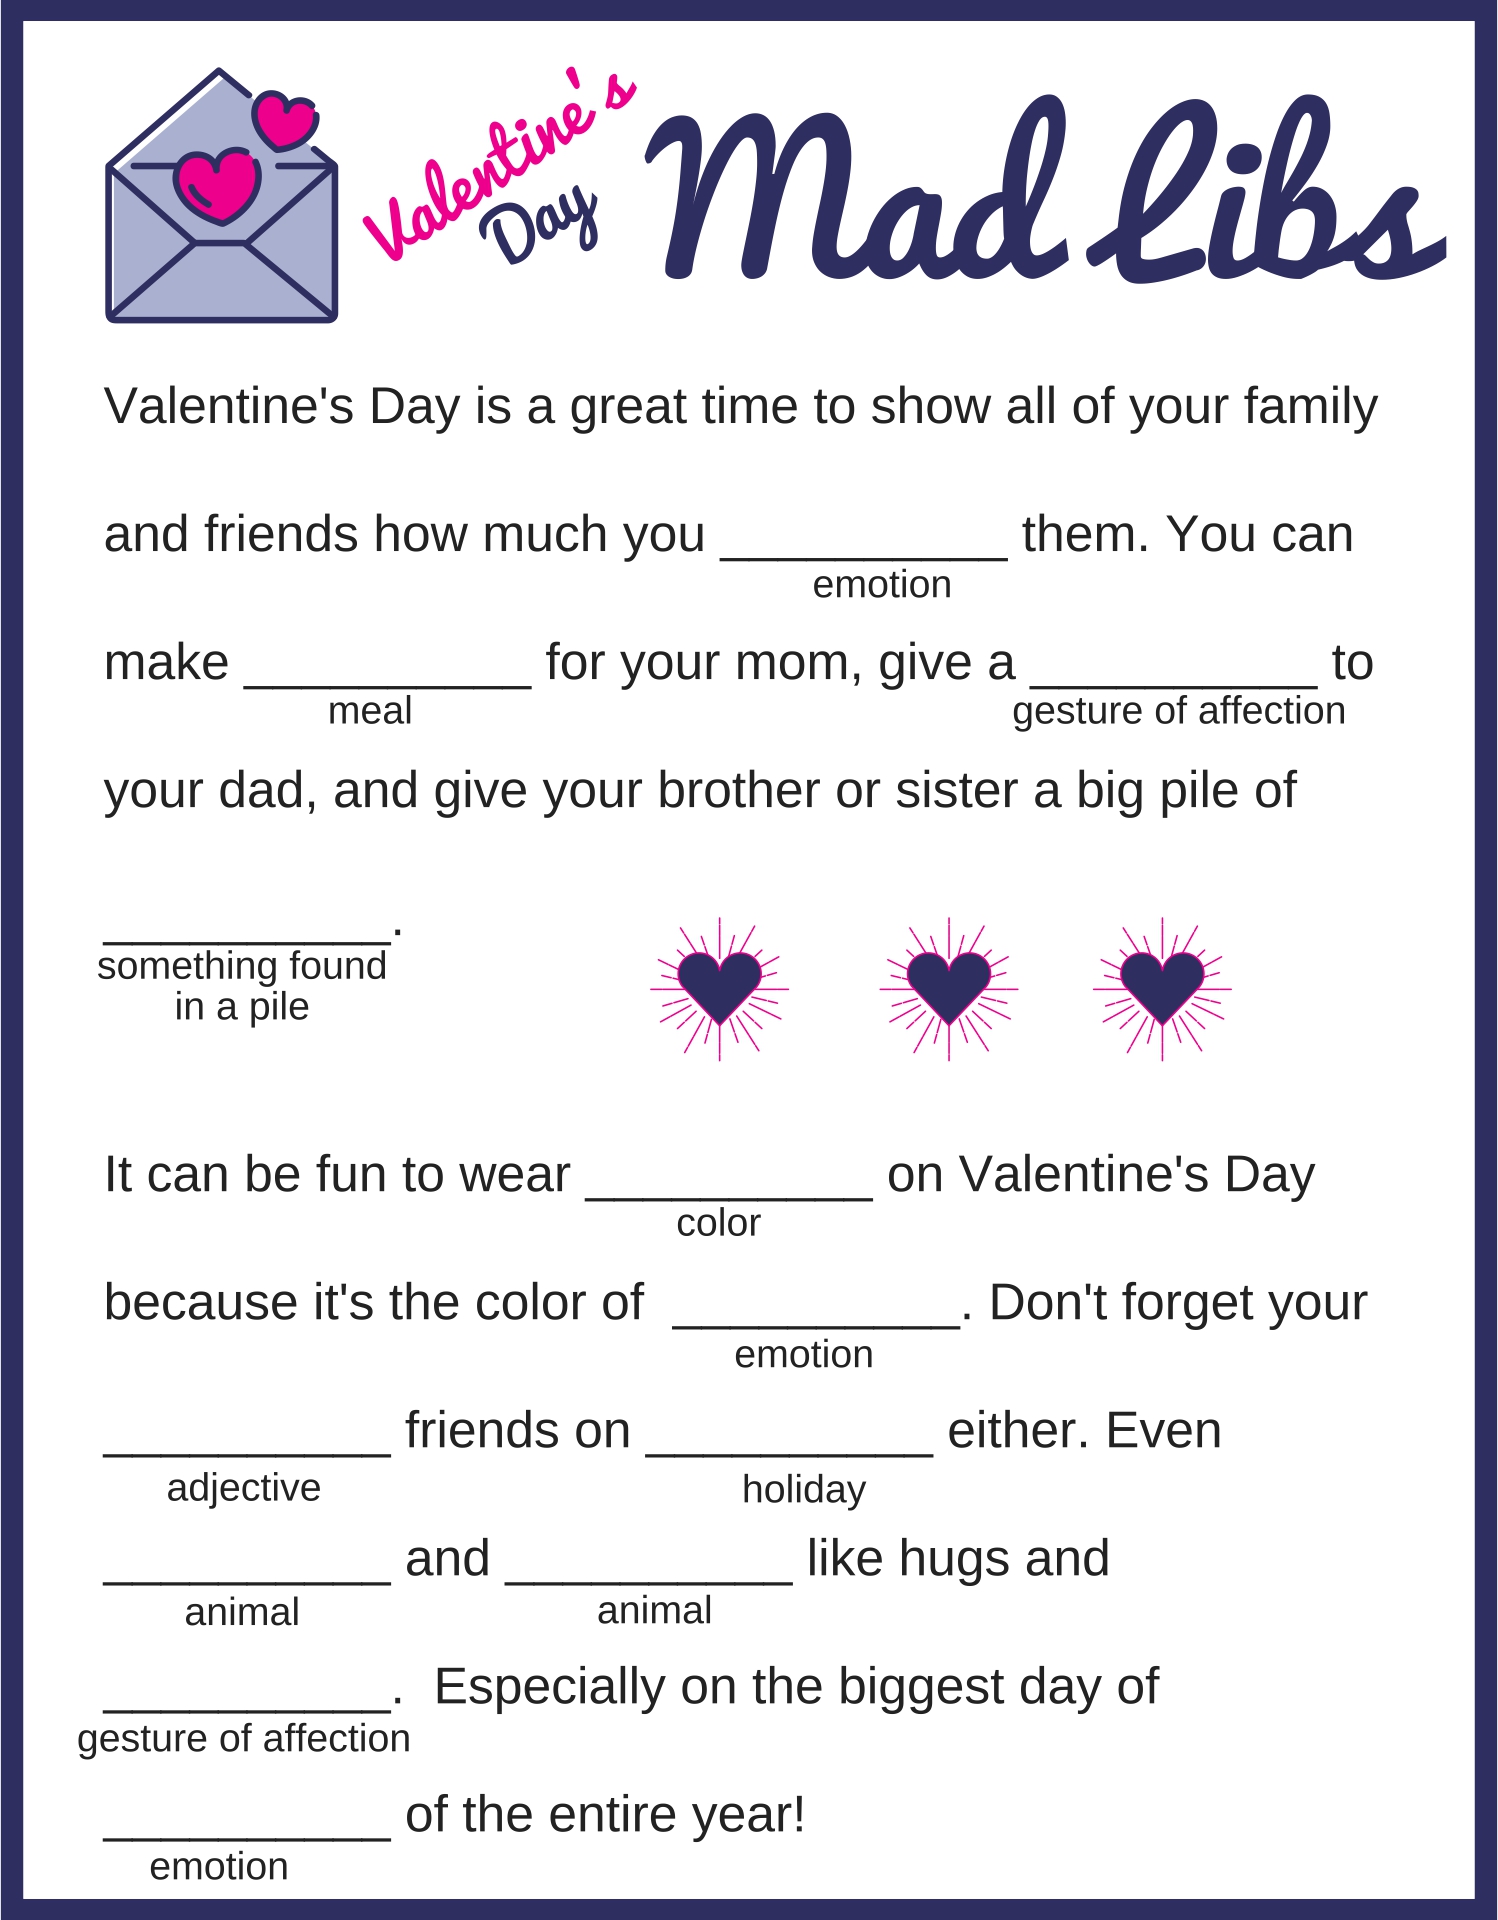 free-printable-valentine-s-day-mad-libs